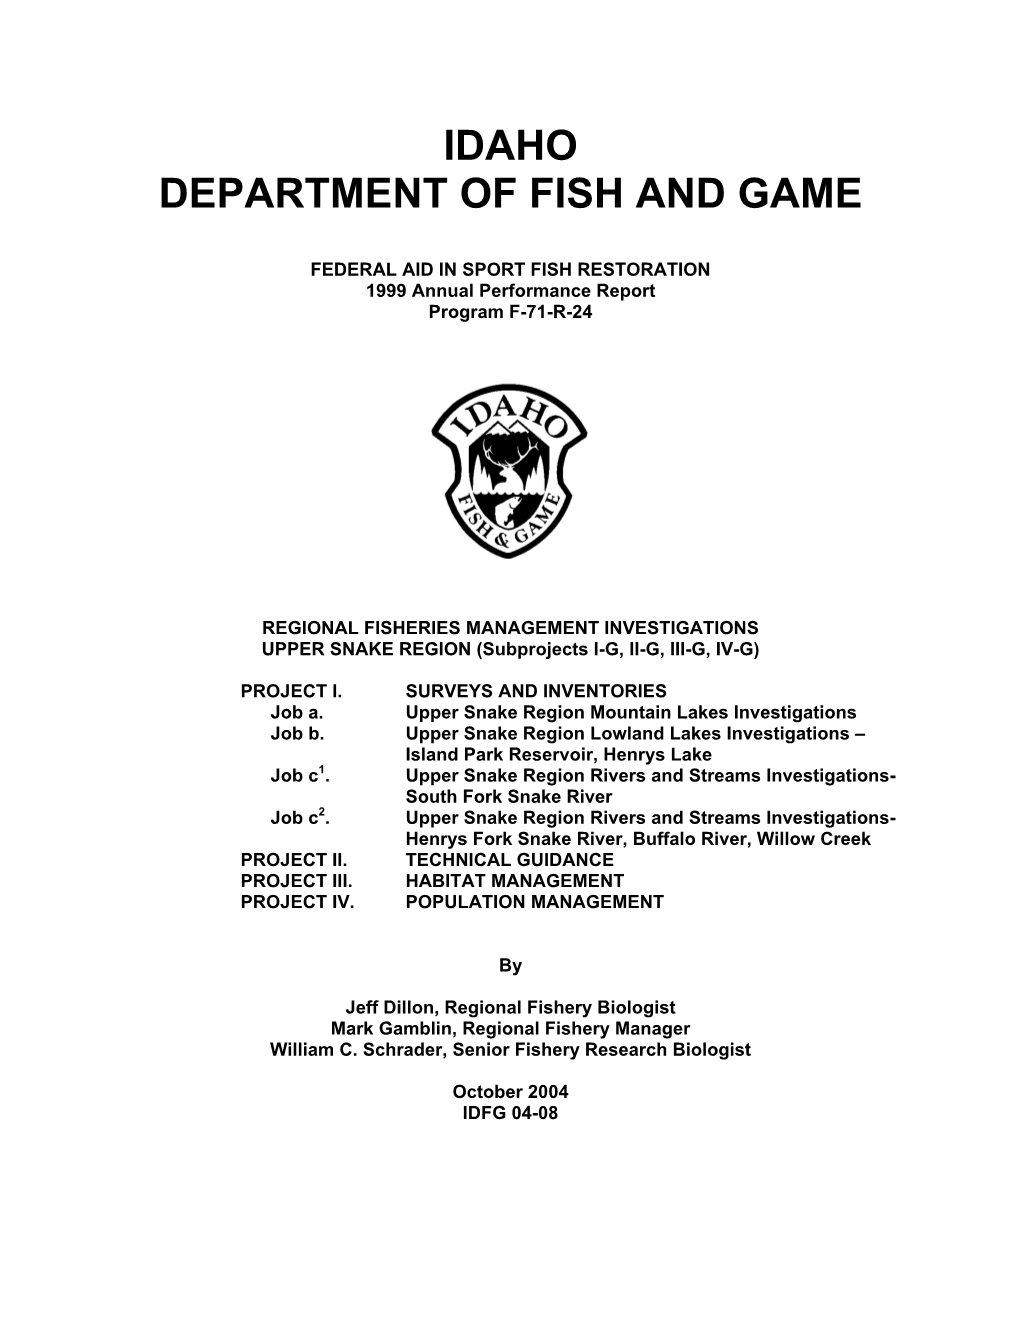 Idaho Department of Fish and Game (Department) Creel Census Program (IDFG 1993)